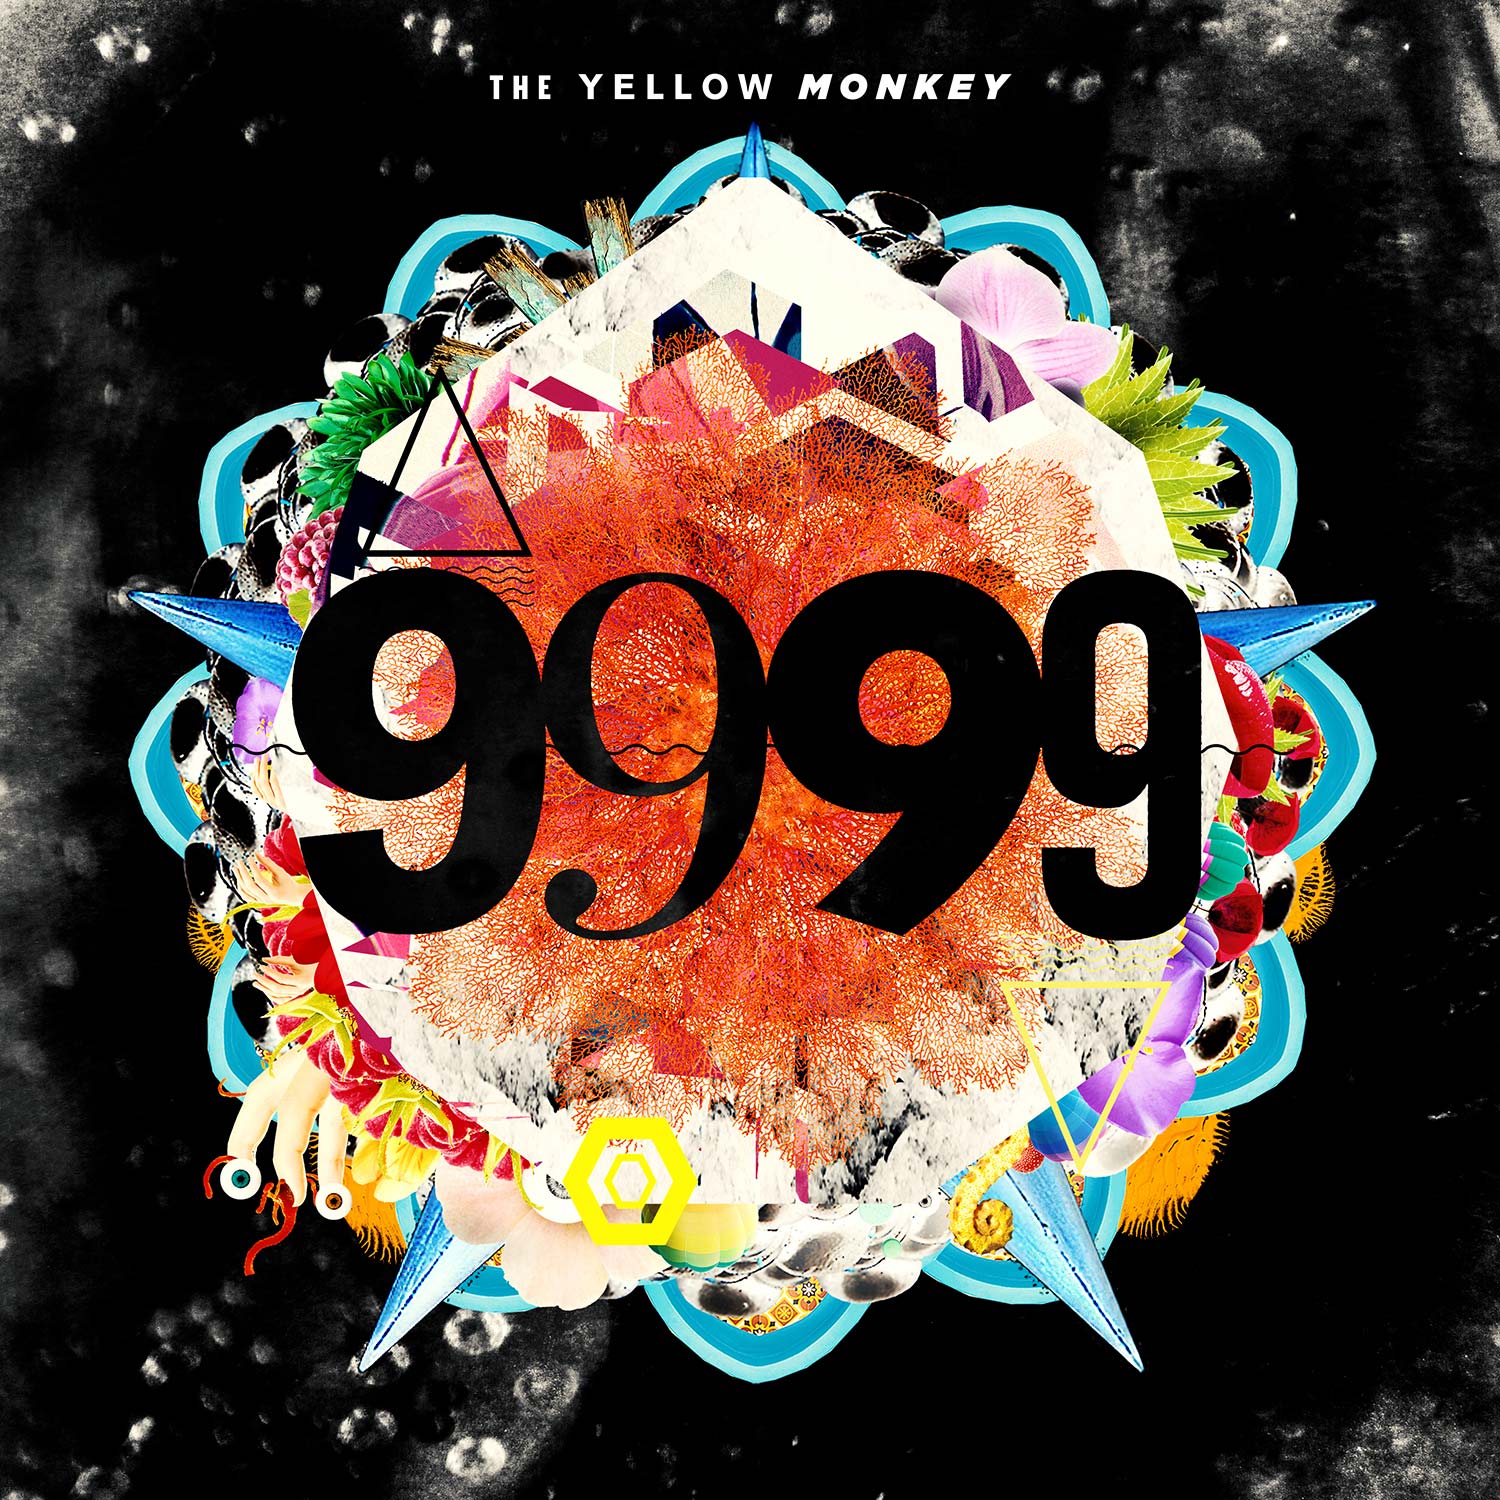 The Yellow Monkey. 9999. 1